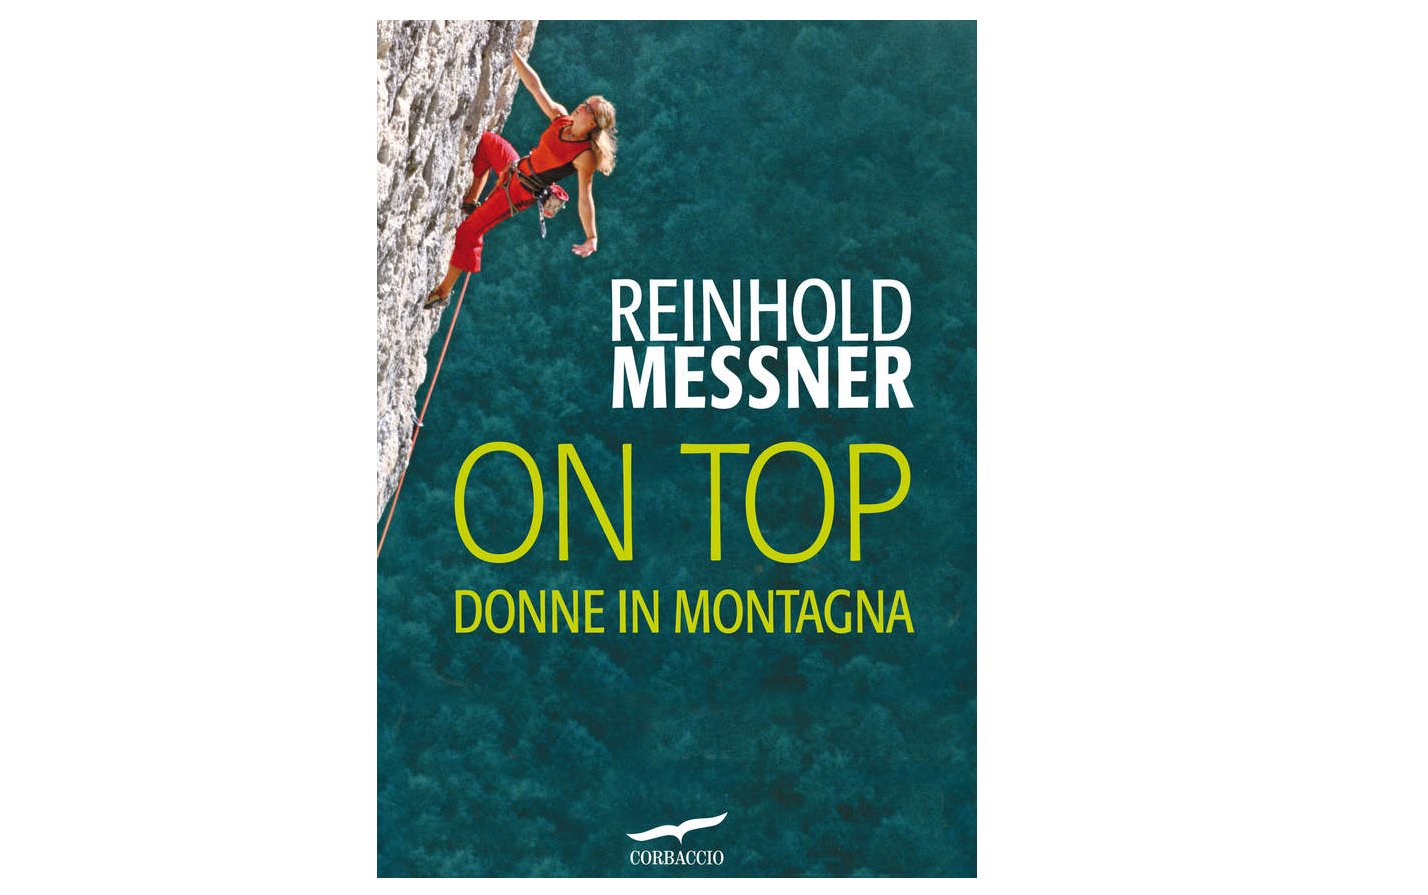 ebook-reinhold-messner-on-top-donne-in-montagna-amazon